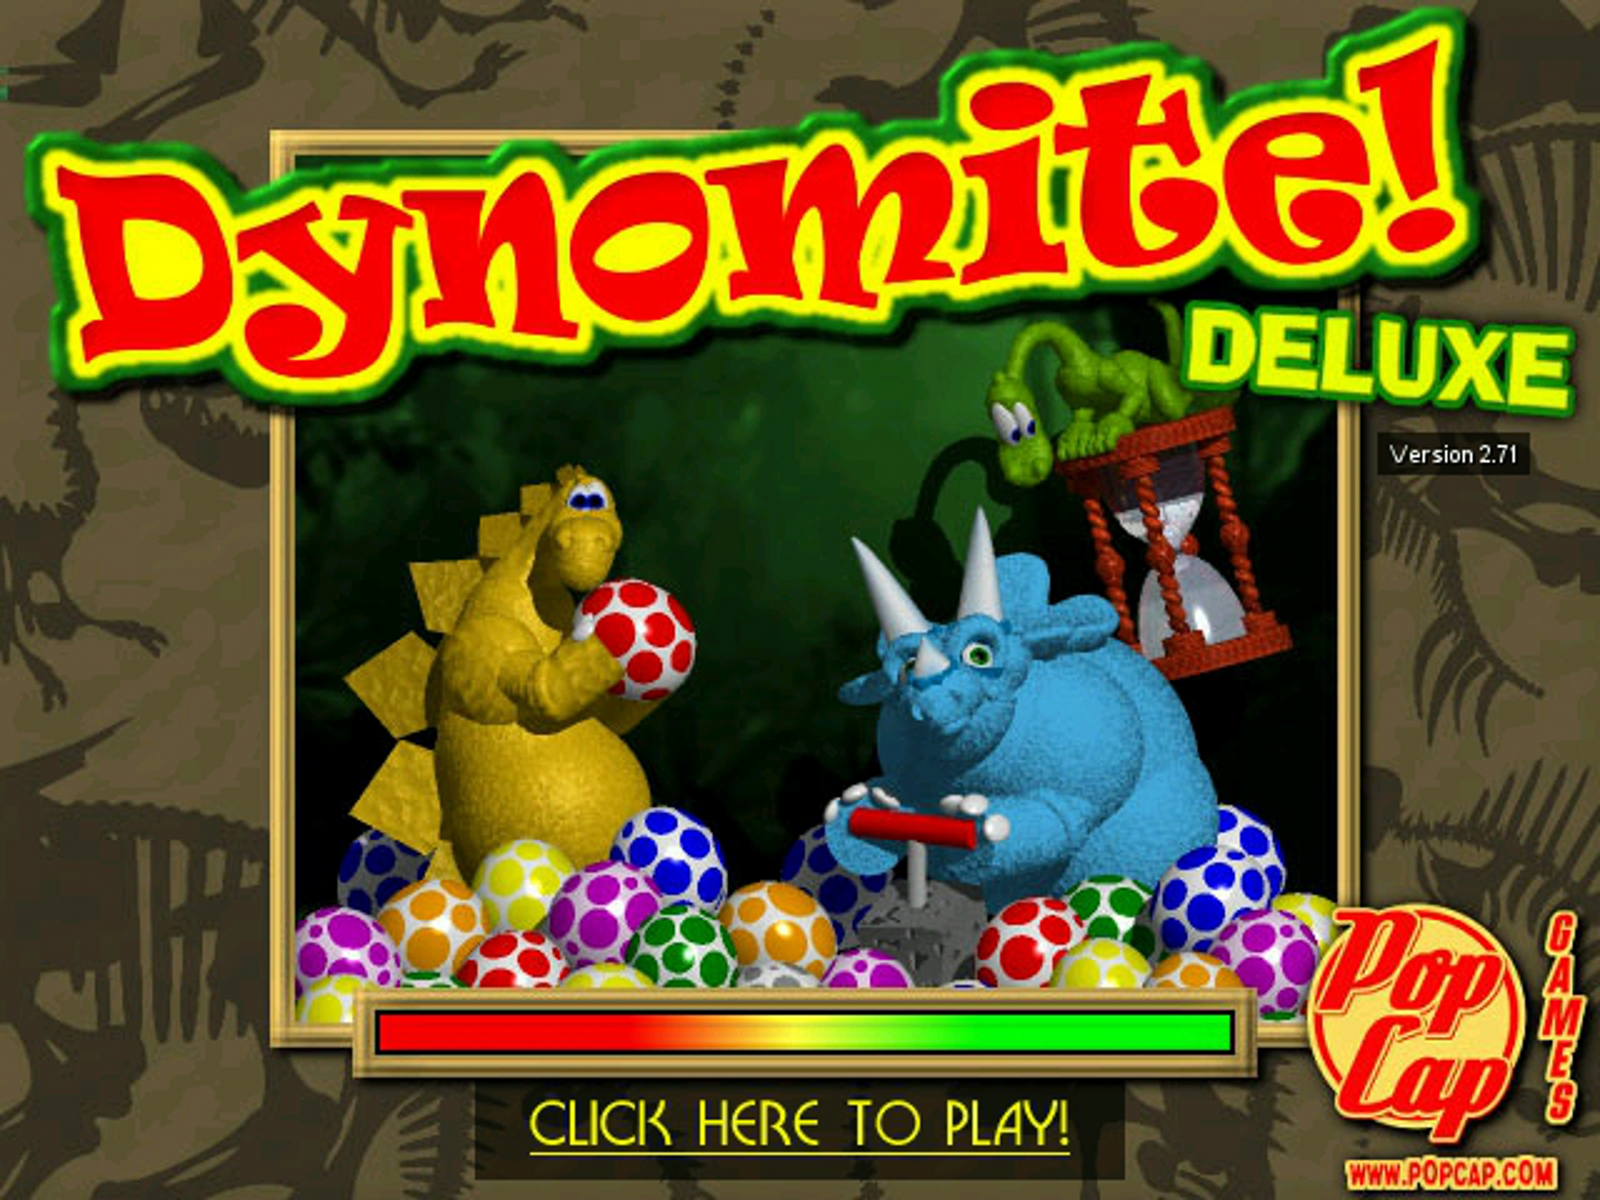 dynomite deluxe online